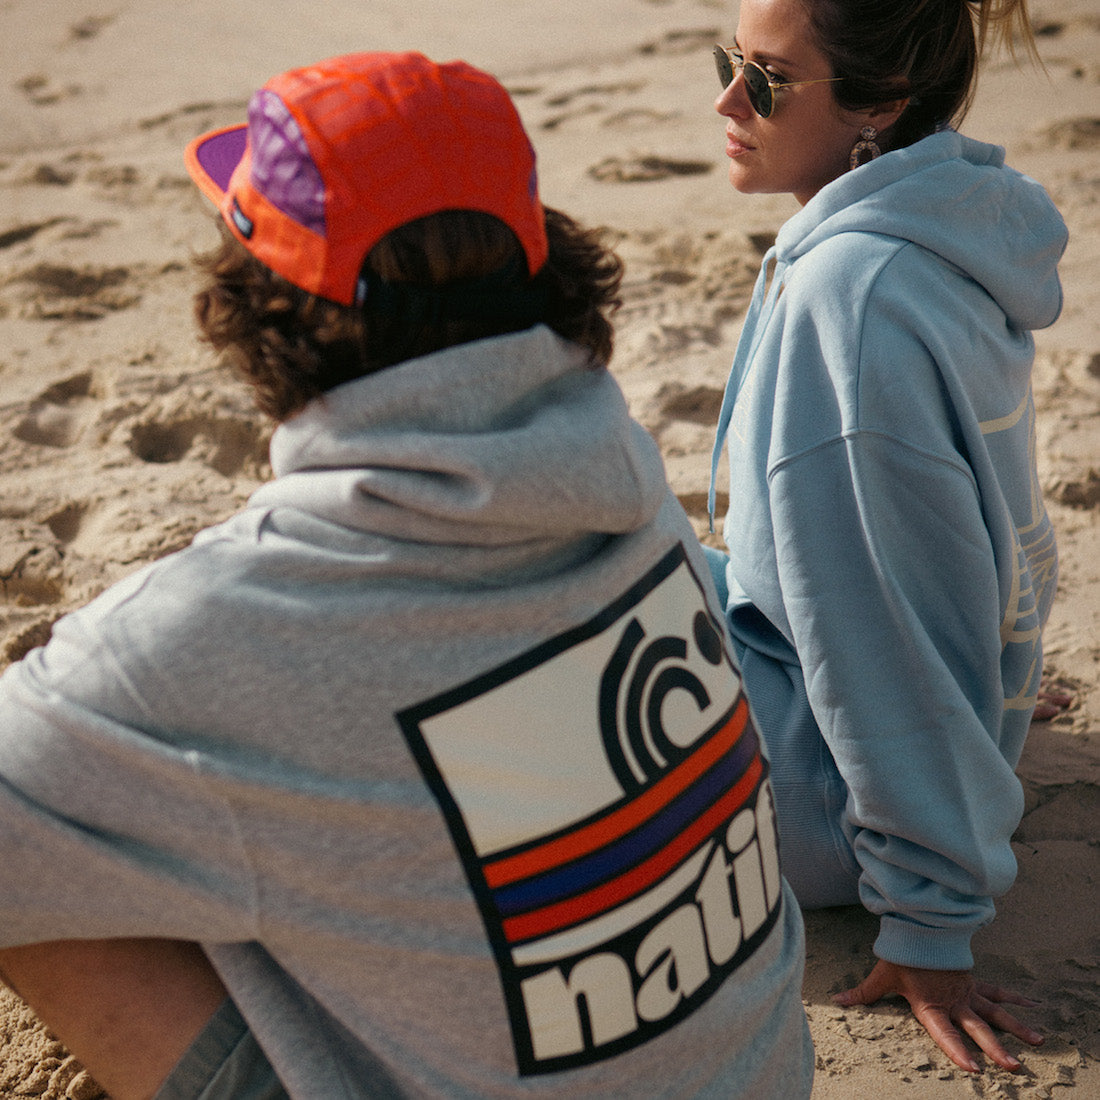 Hoodie unisex Natif Tsunami de la marque Natif sur la plage du Cap Ferret